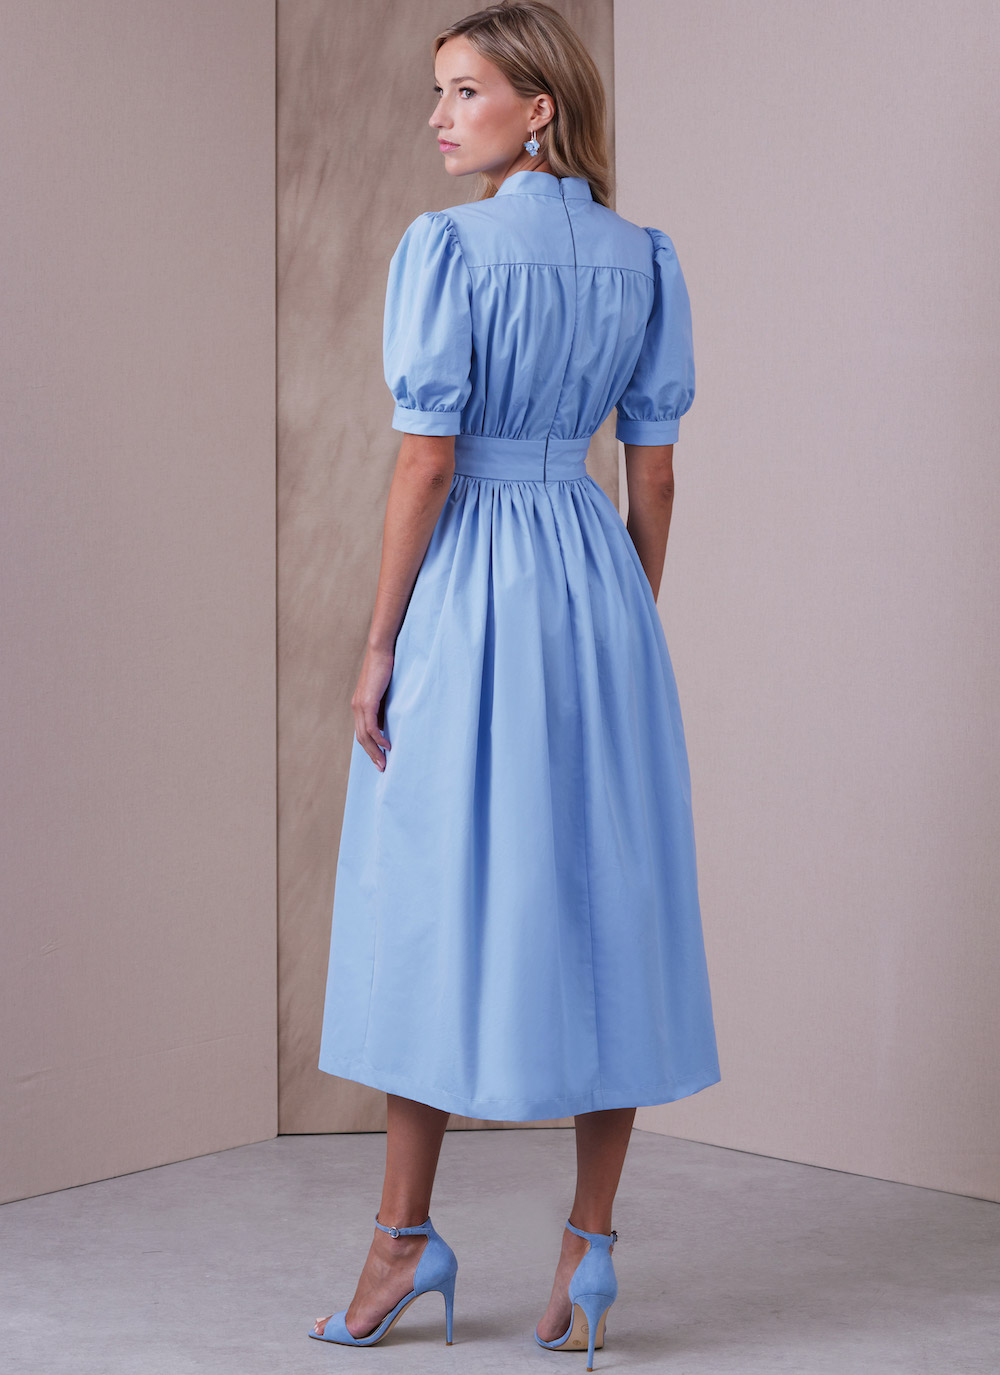 Vogue® Patterns Papierschnittmuster Damen Kleid mit Raffung V1934